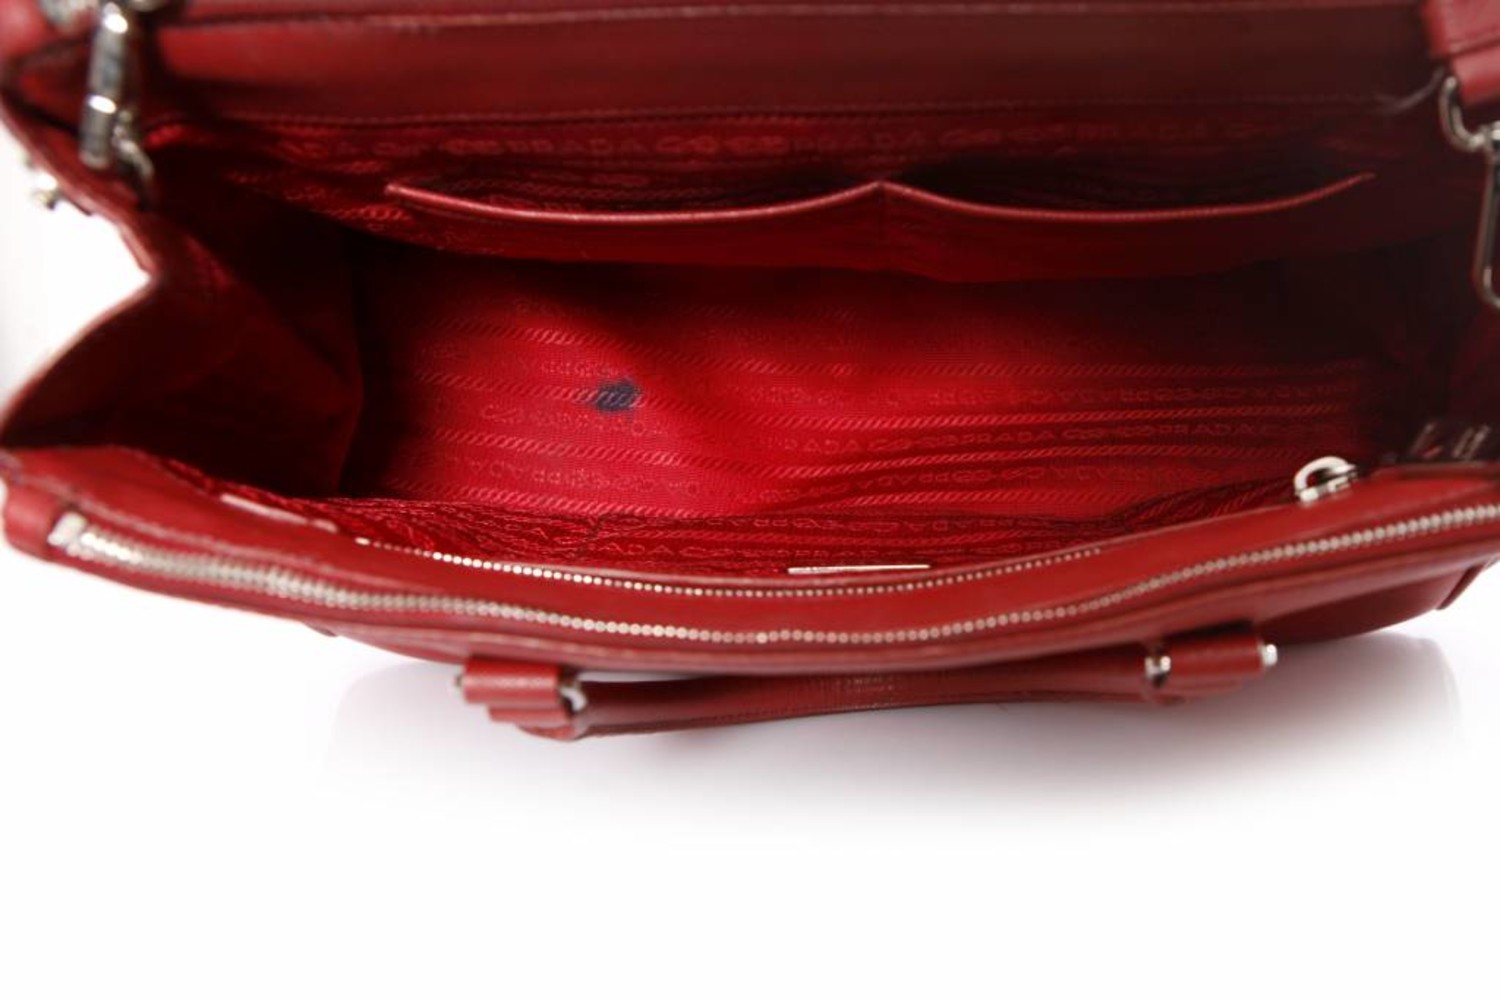 Prada Red Saffiano Leather Large Galleria Tote Bag